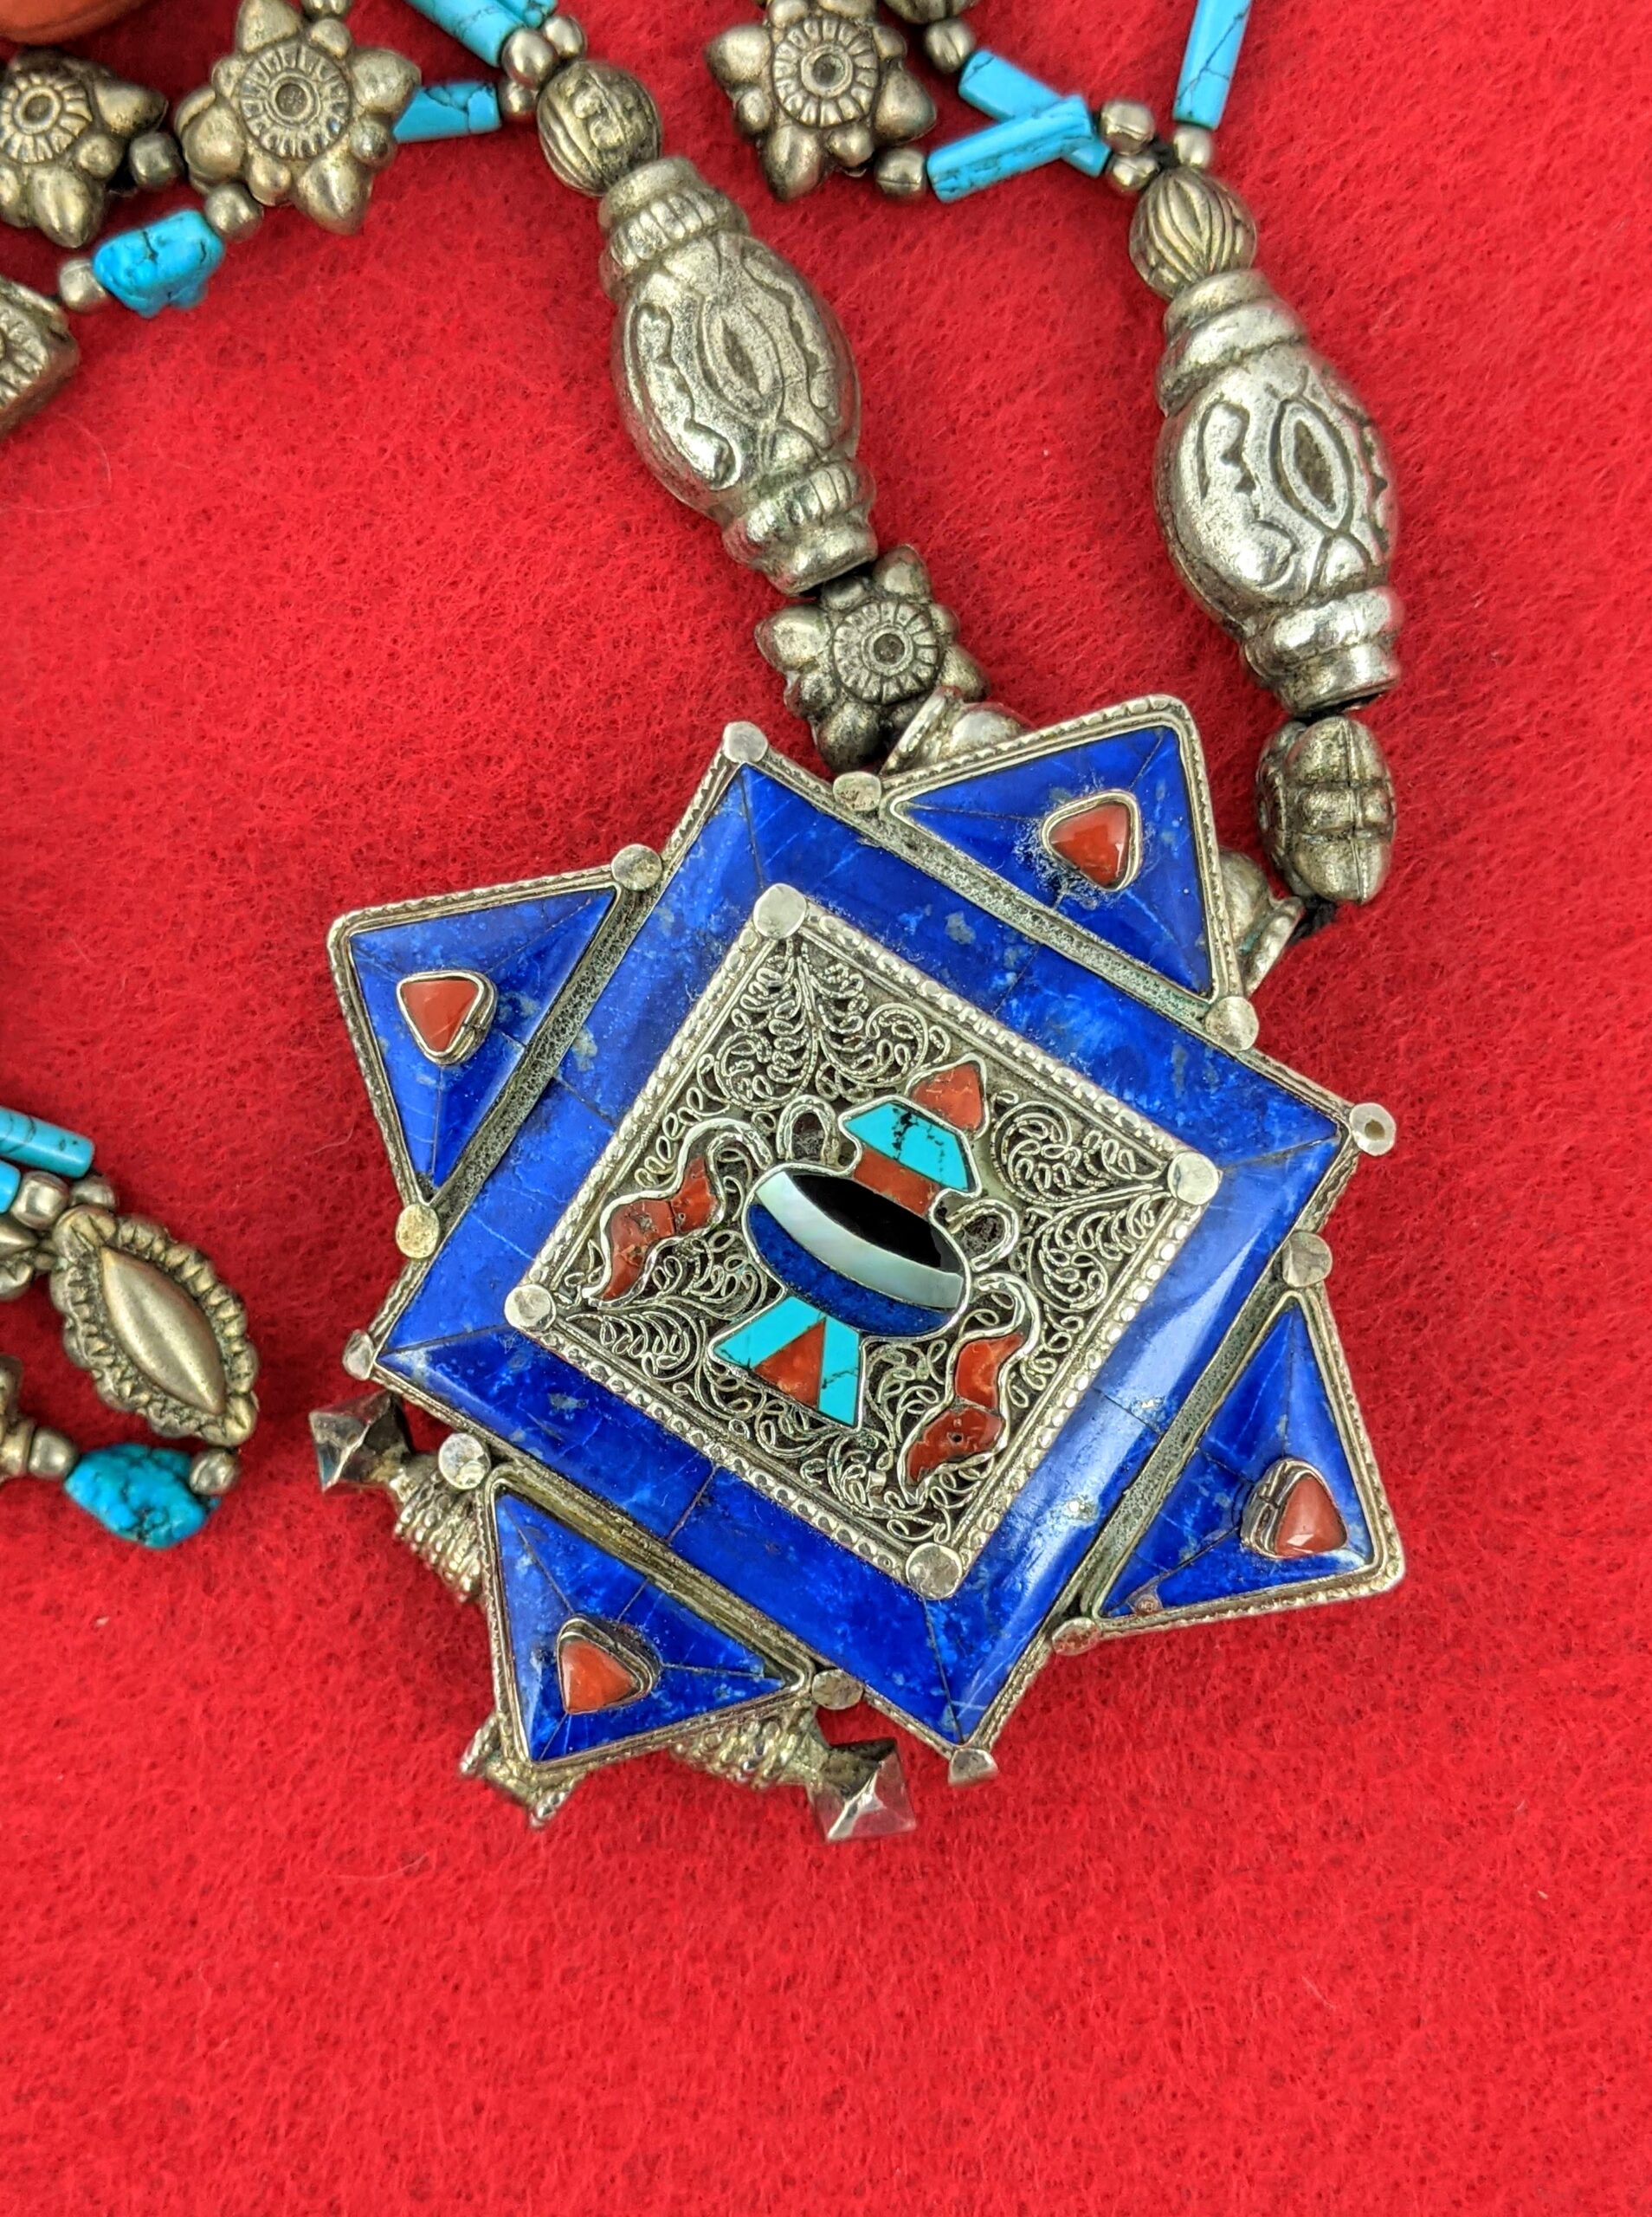 Lapis lazuli pendant on necklace.